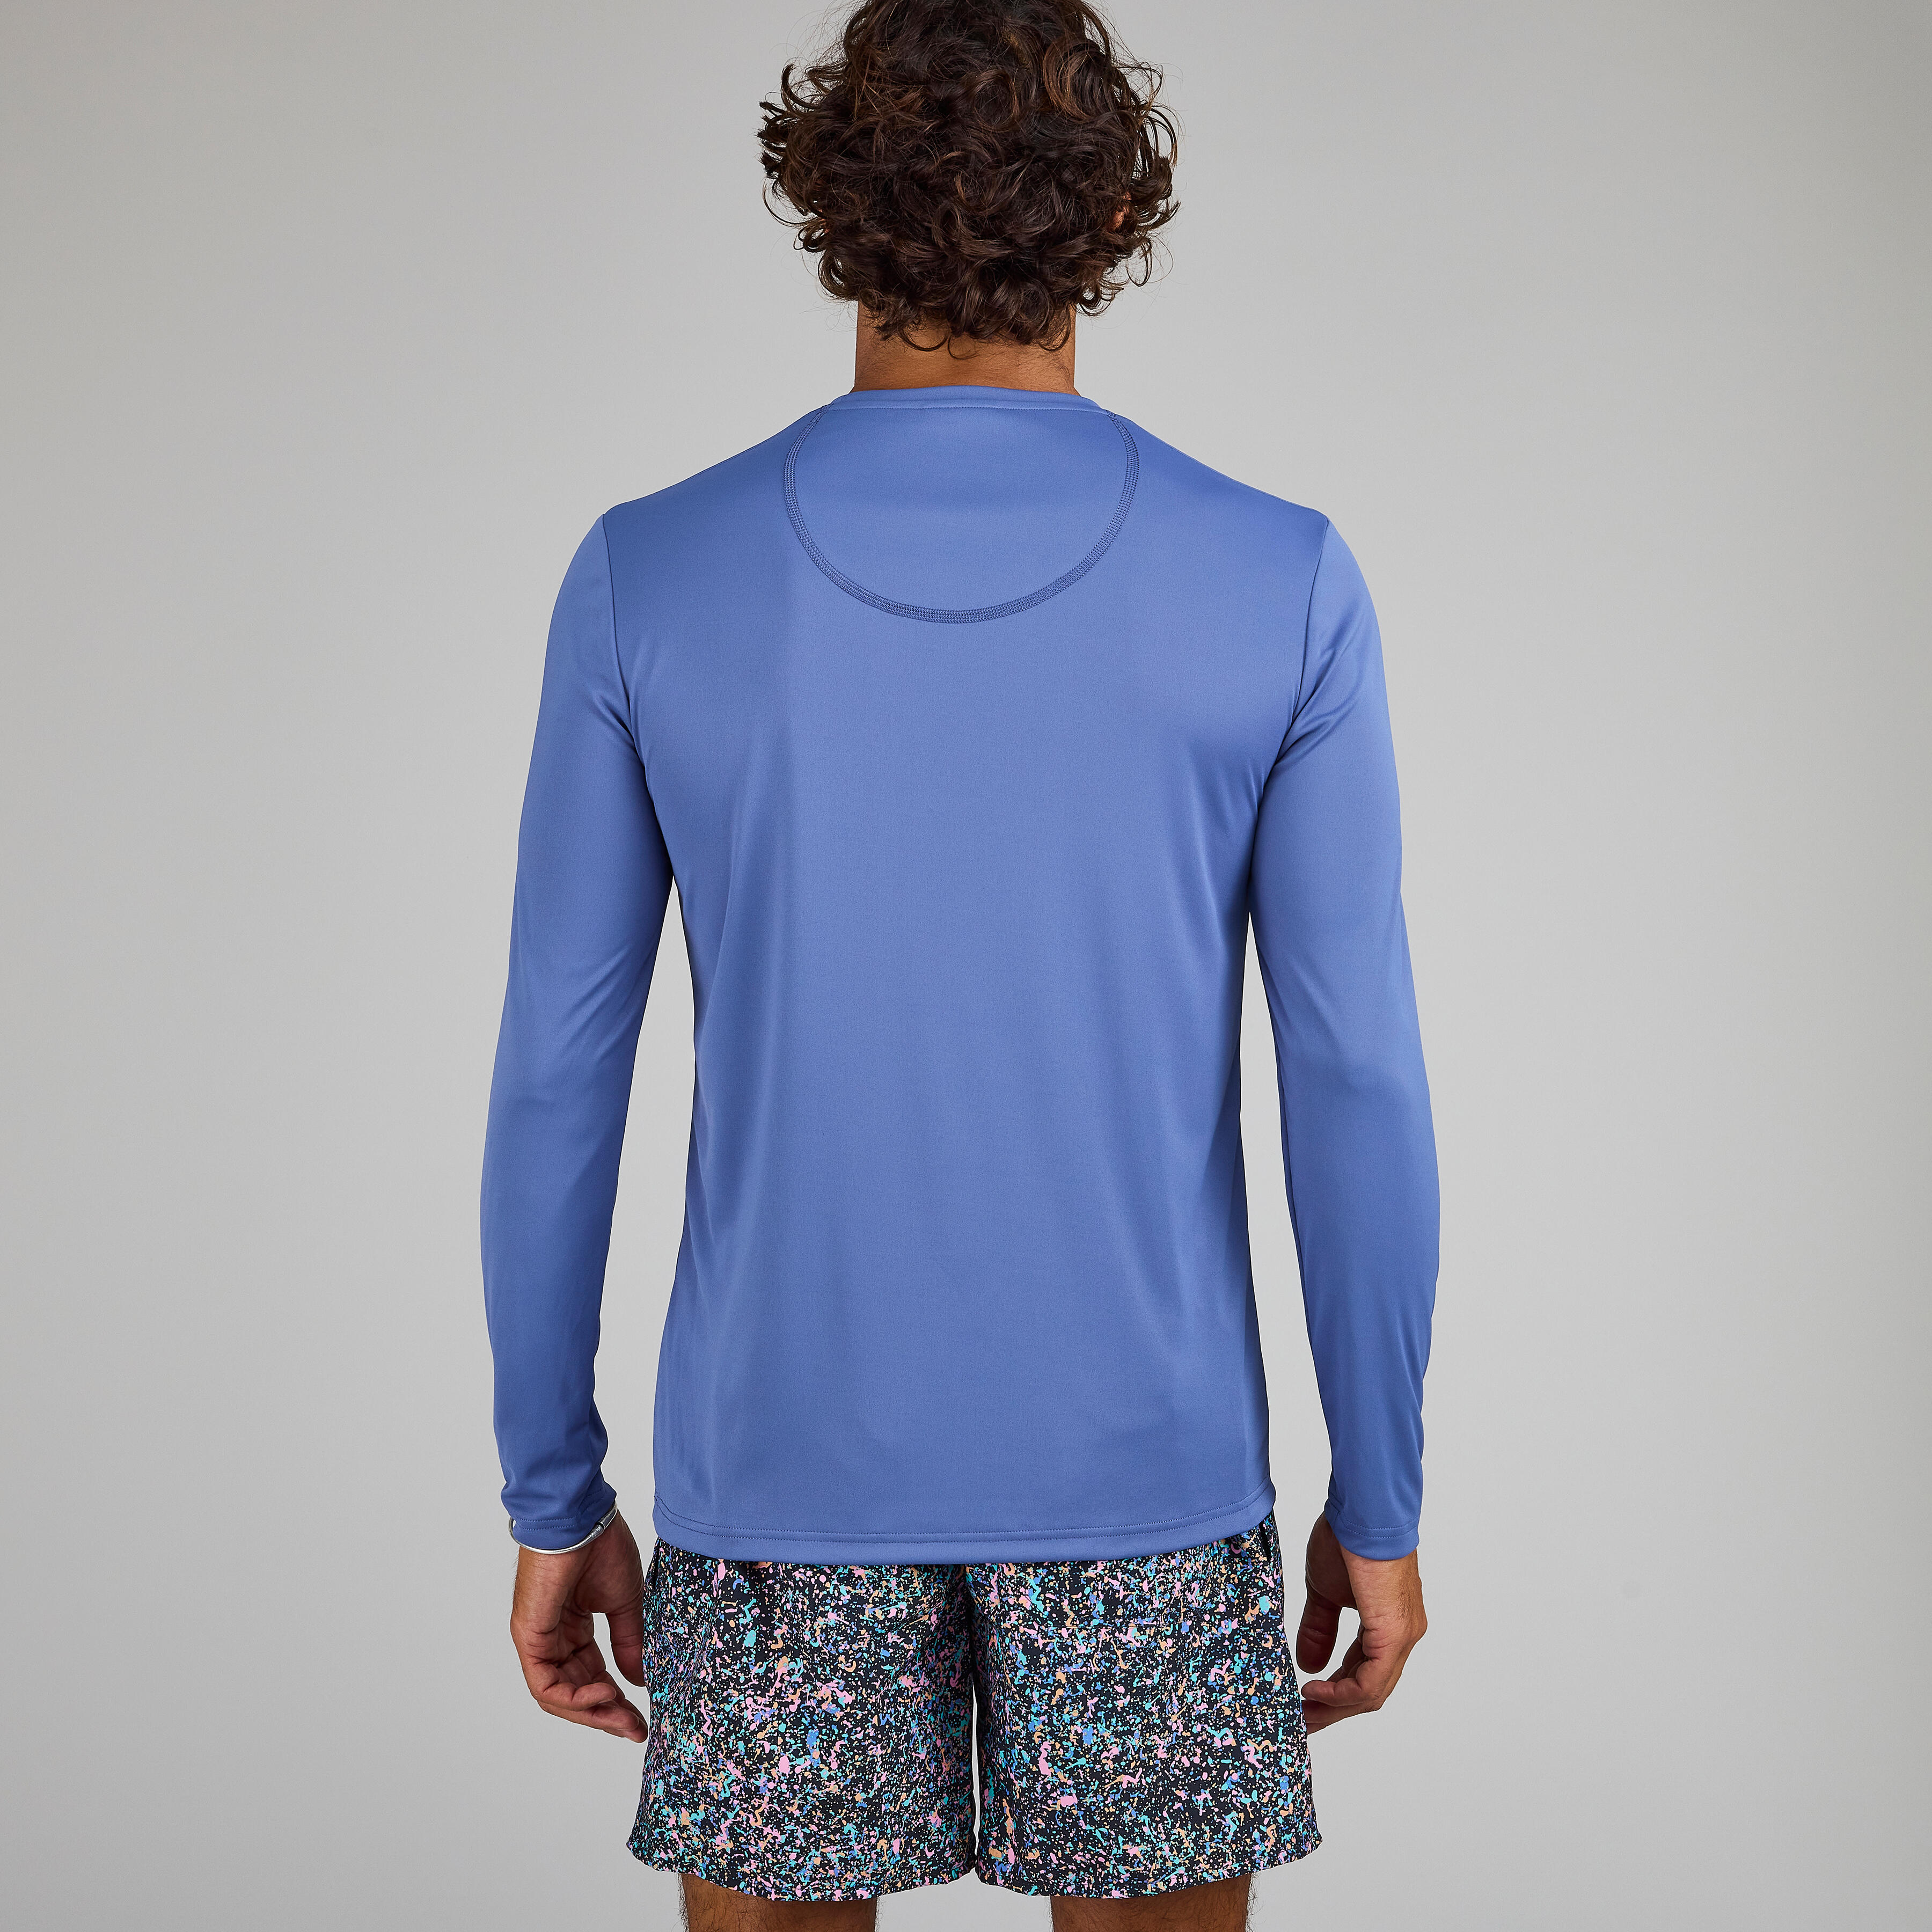 voofly SPF T-Shirt for Men UV Sun Protection UPF 50+ Long Sleeve Gym Shirt  Breathable Comfortable Thin Fishing Sweatshirt Blue XXL - ShopStyle